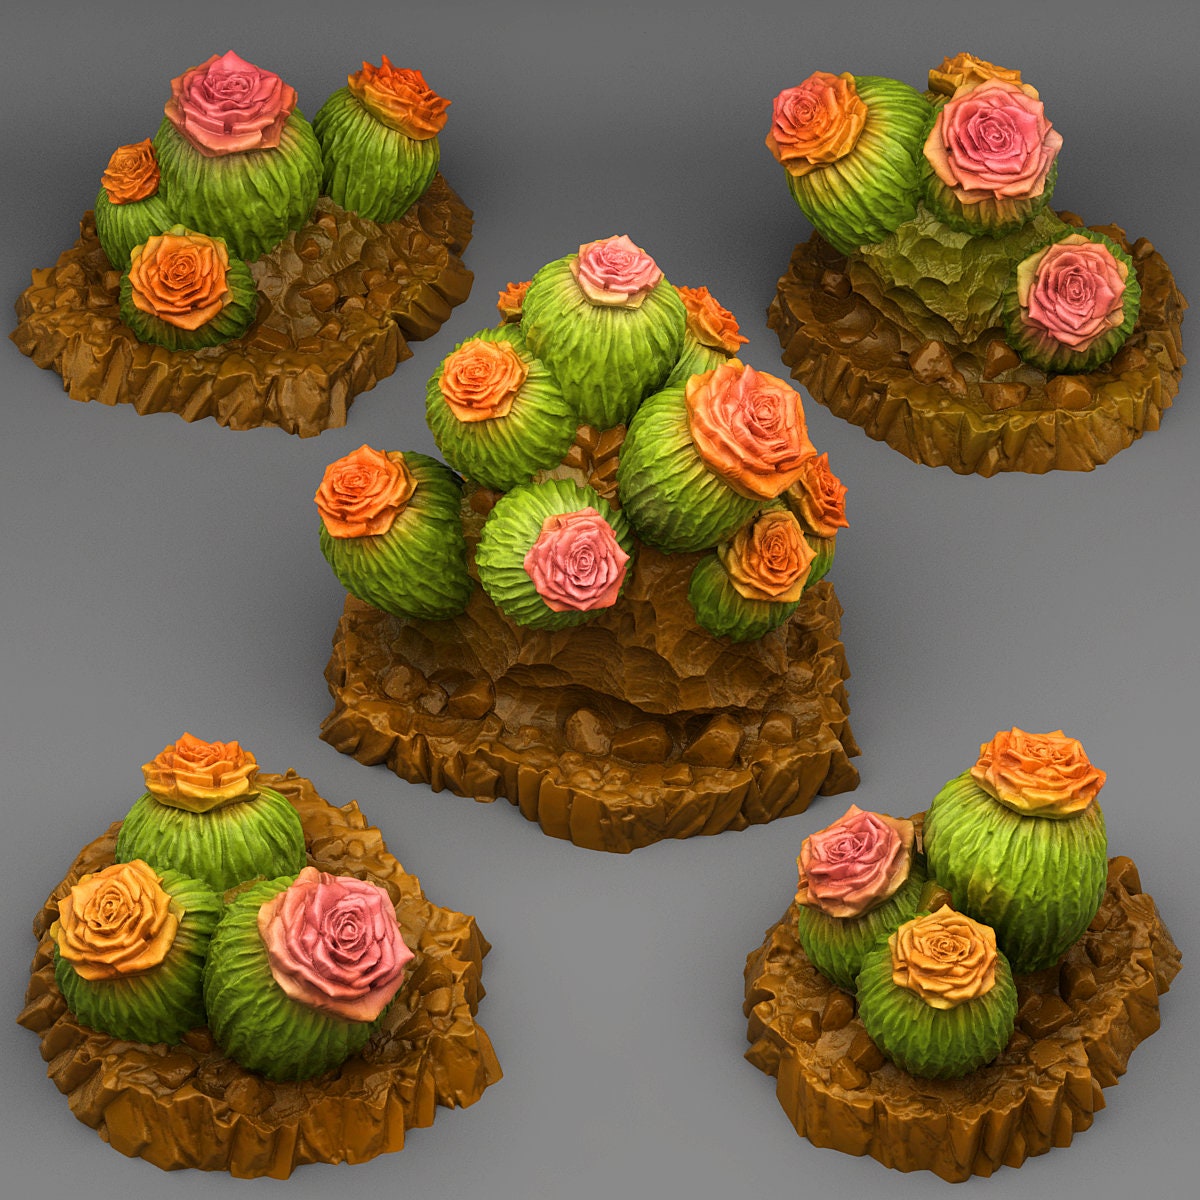 Cactus Flowers Scatter Terrain - Fantastic Plants and Rocks 